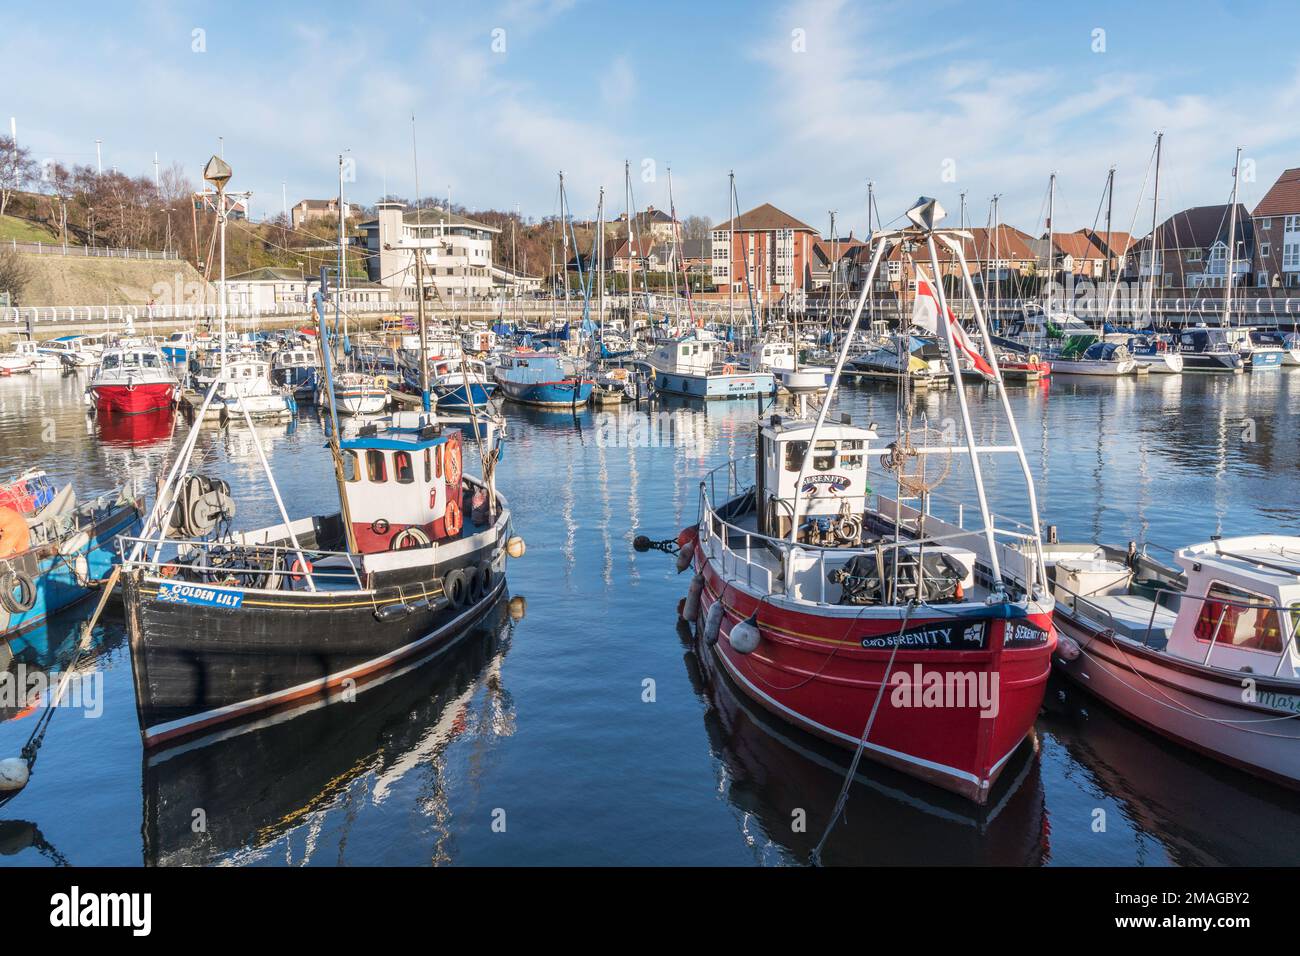 Boats moored in Roker marina, Sunderland, north east England, UK Stock Photo